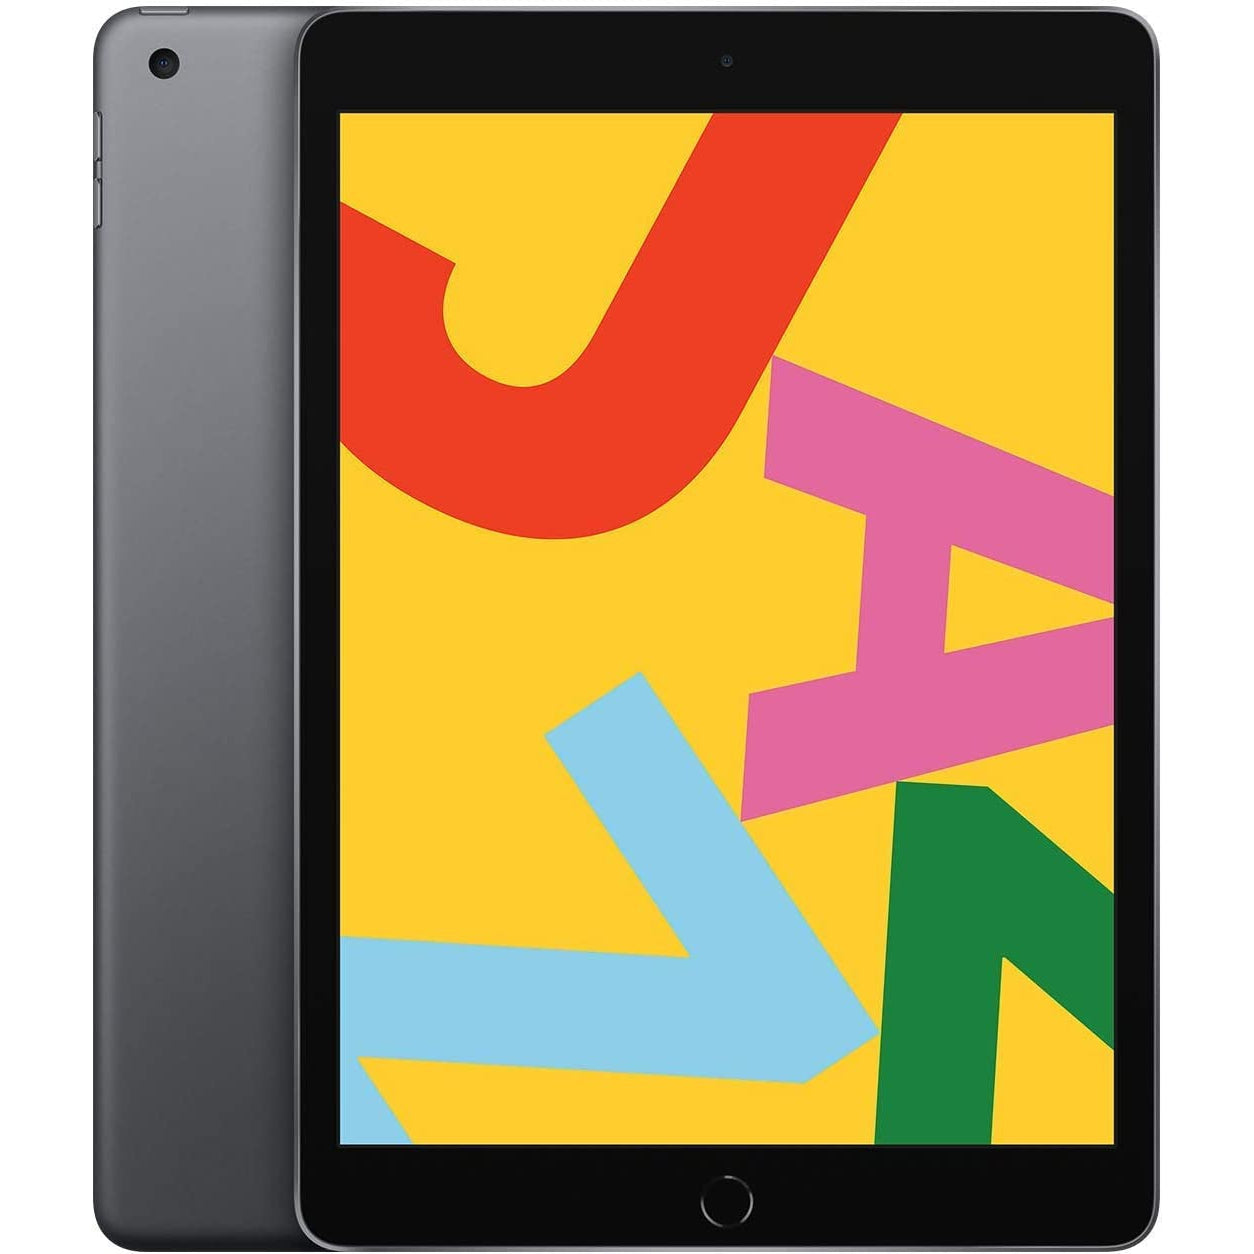 Apple iPad 7th Gen, 10.2" Wi-Fi Tablet - MW742LL/A - Space Grey - Refurbished Good